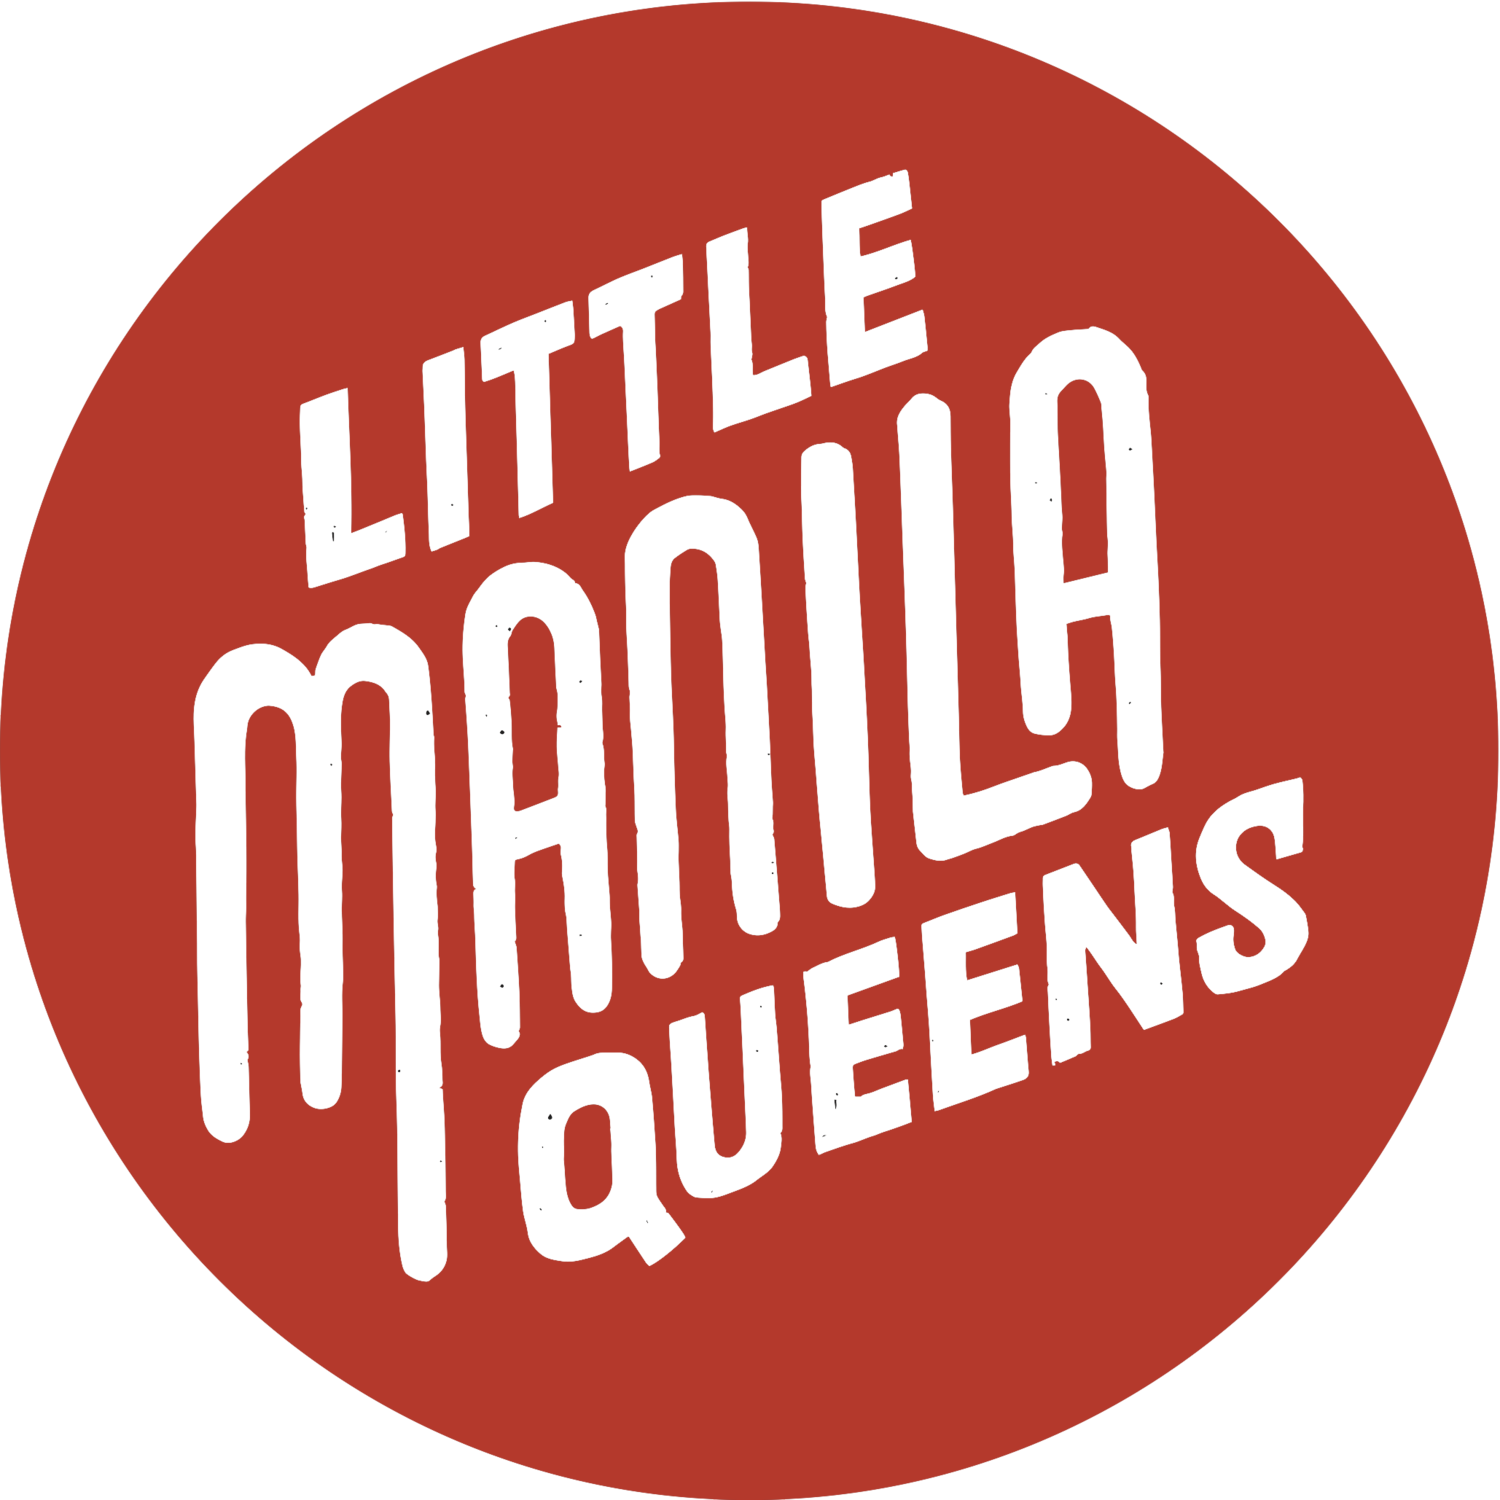 Little Manila Queens Bayanihan Arts